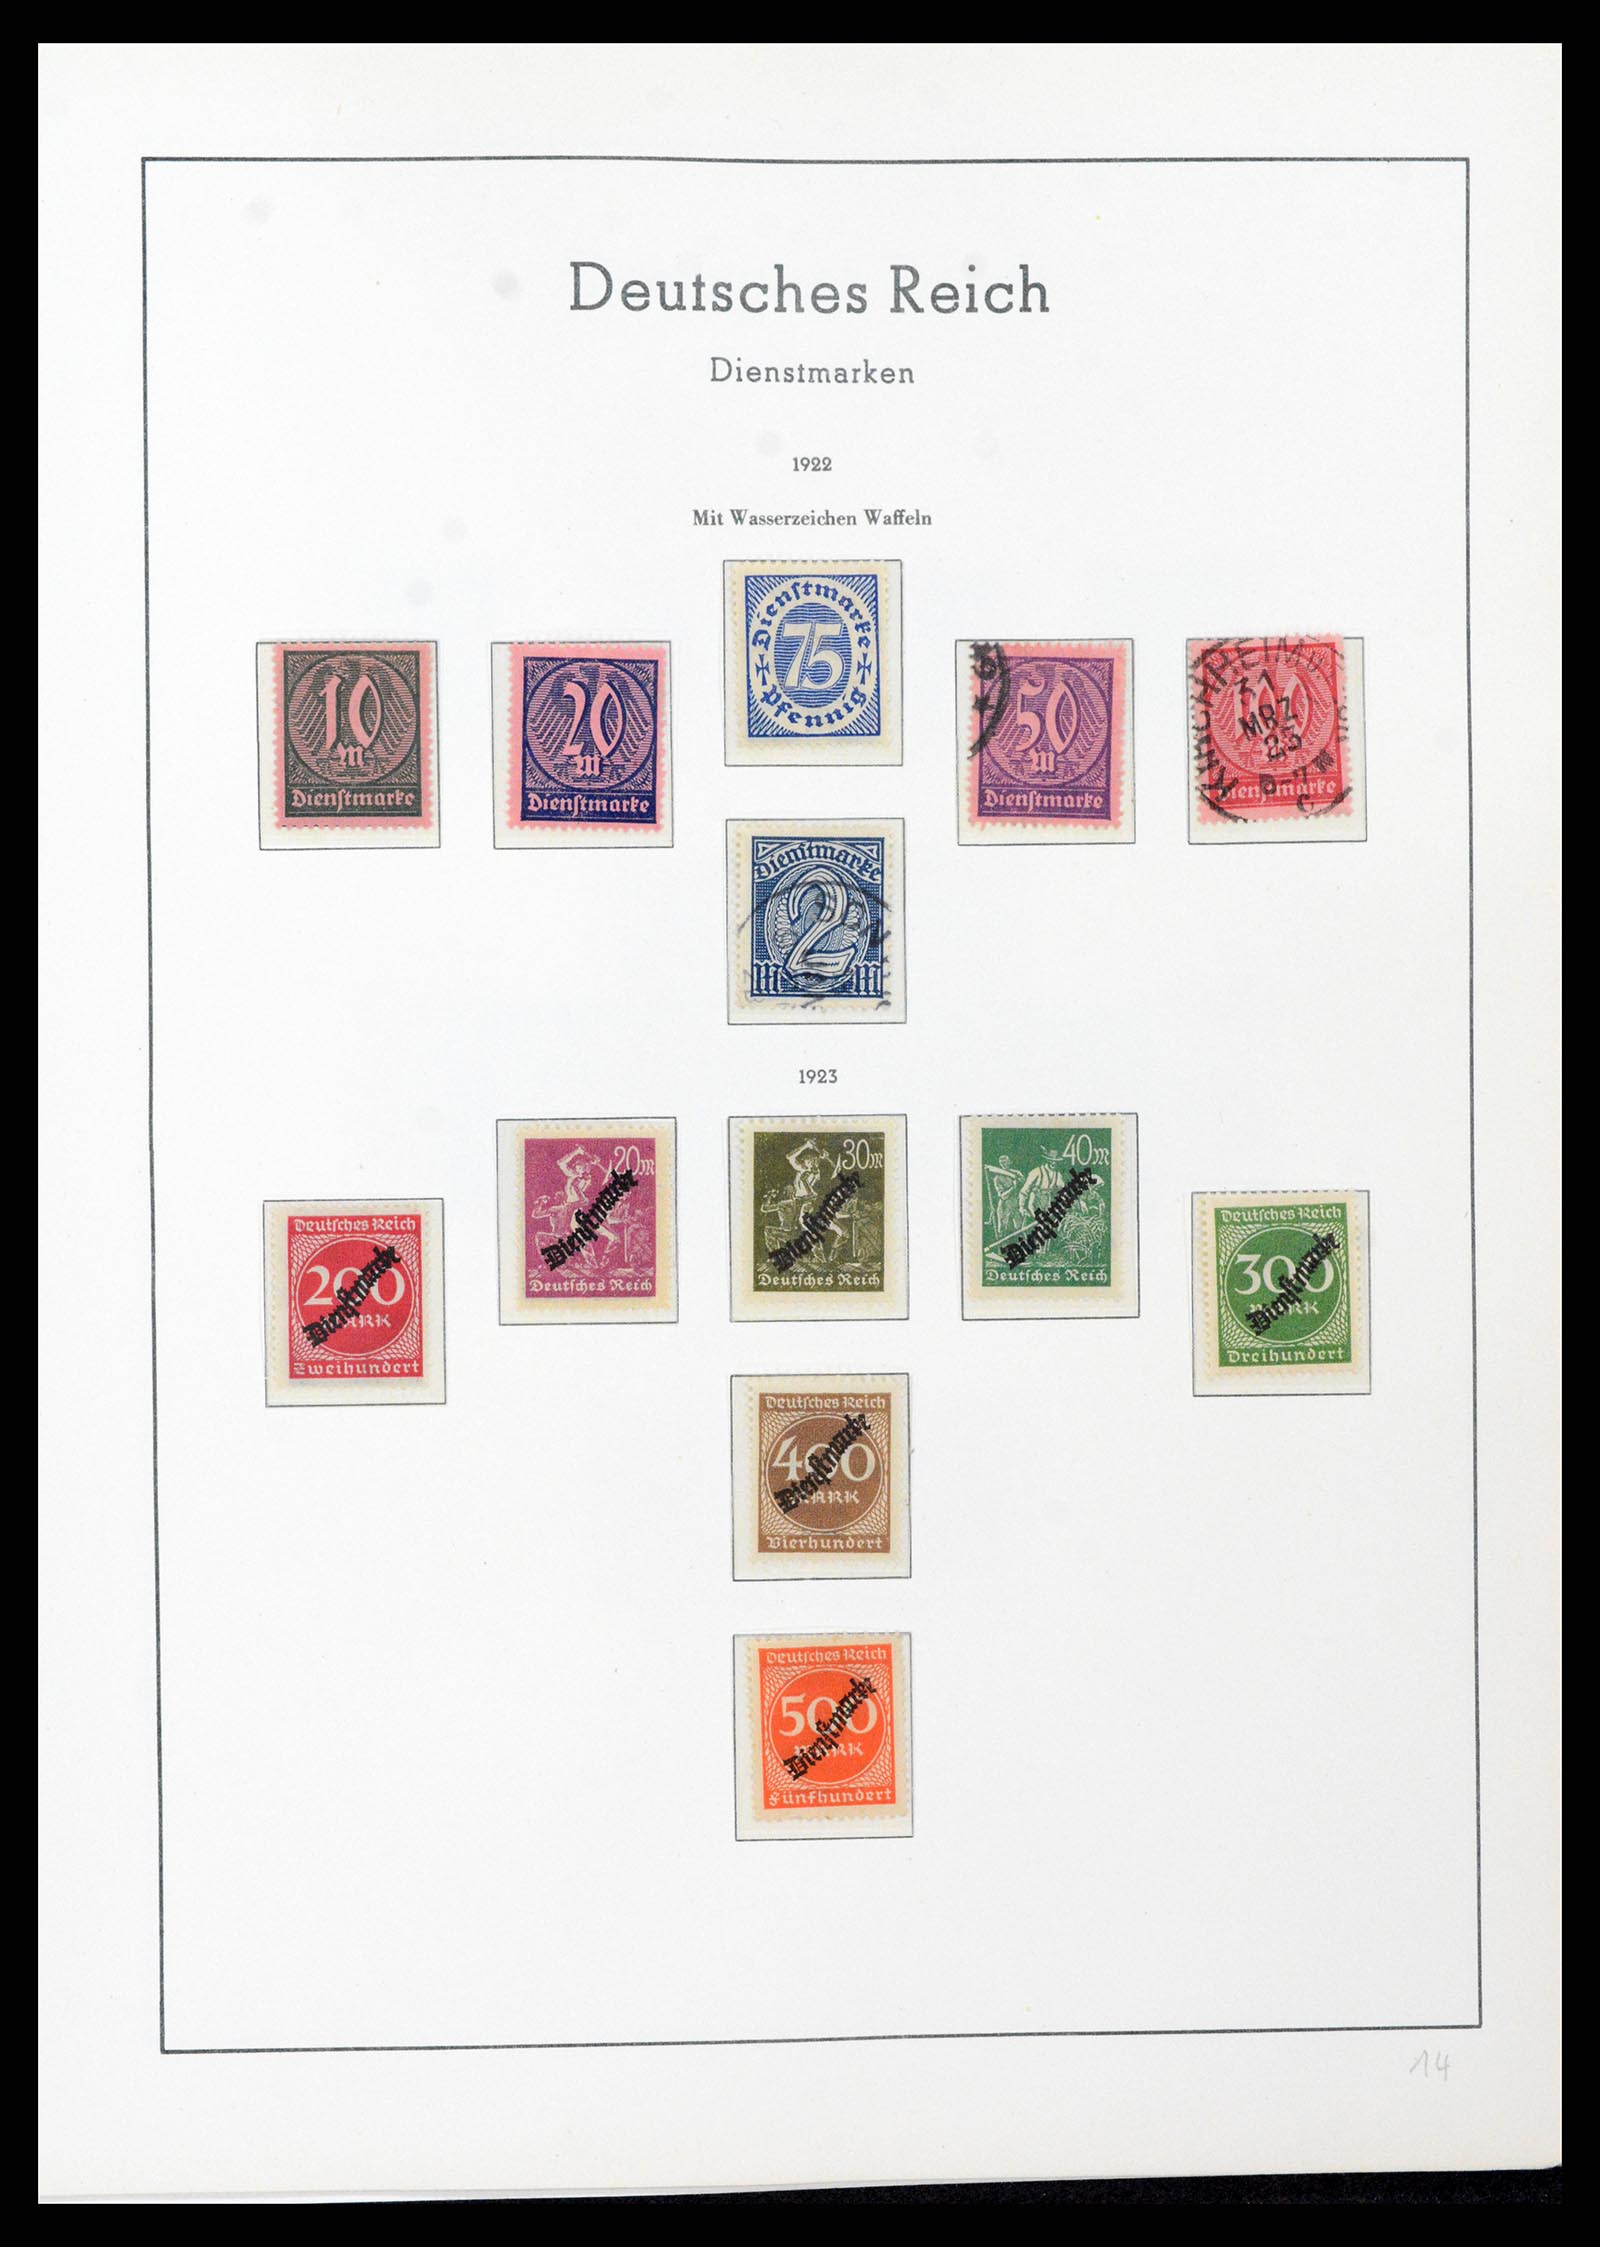 37589 050 - Stamp collection 37589 German Reich 1872-1945.